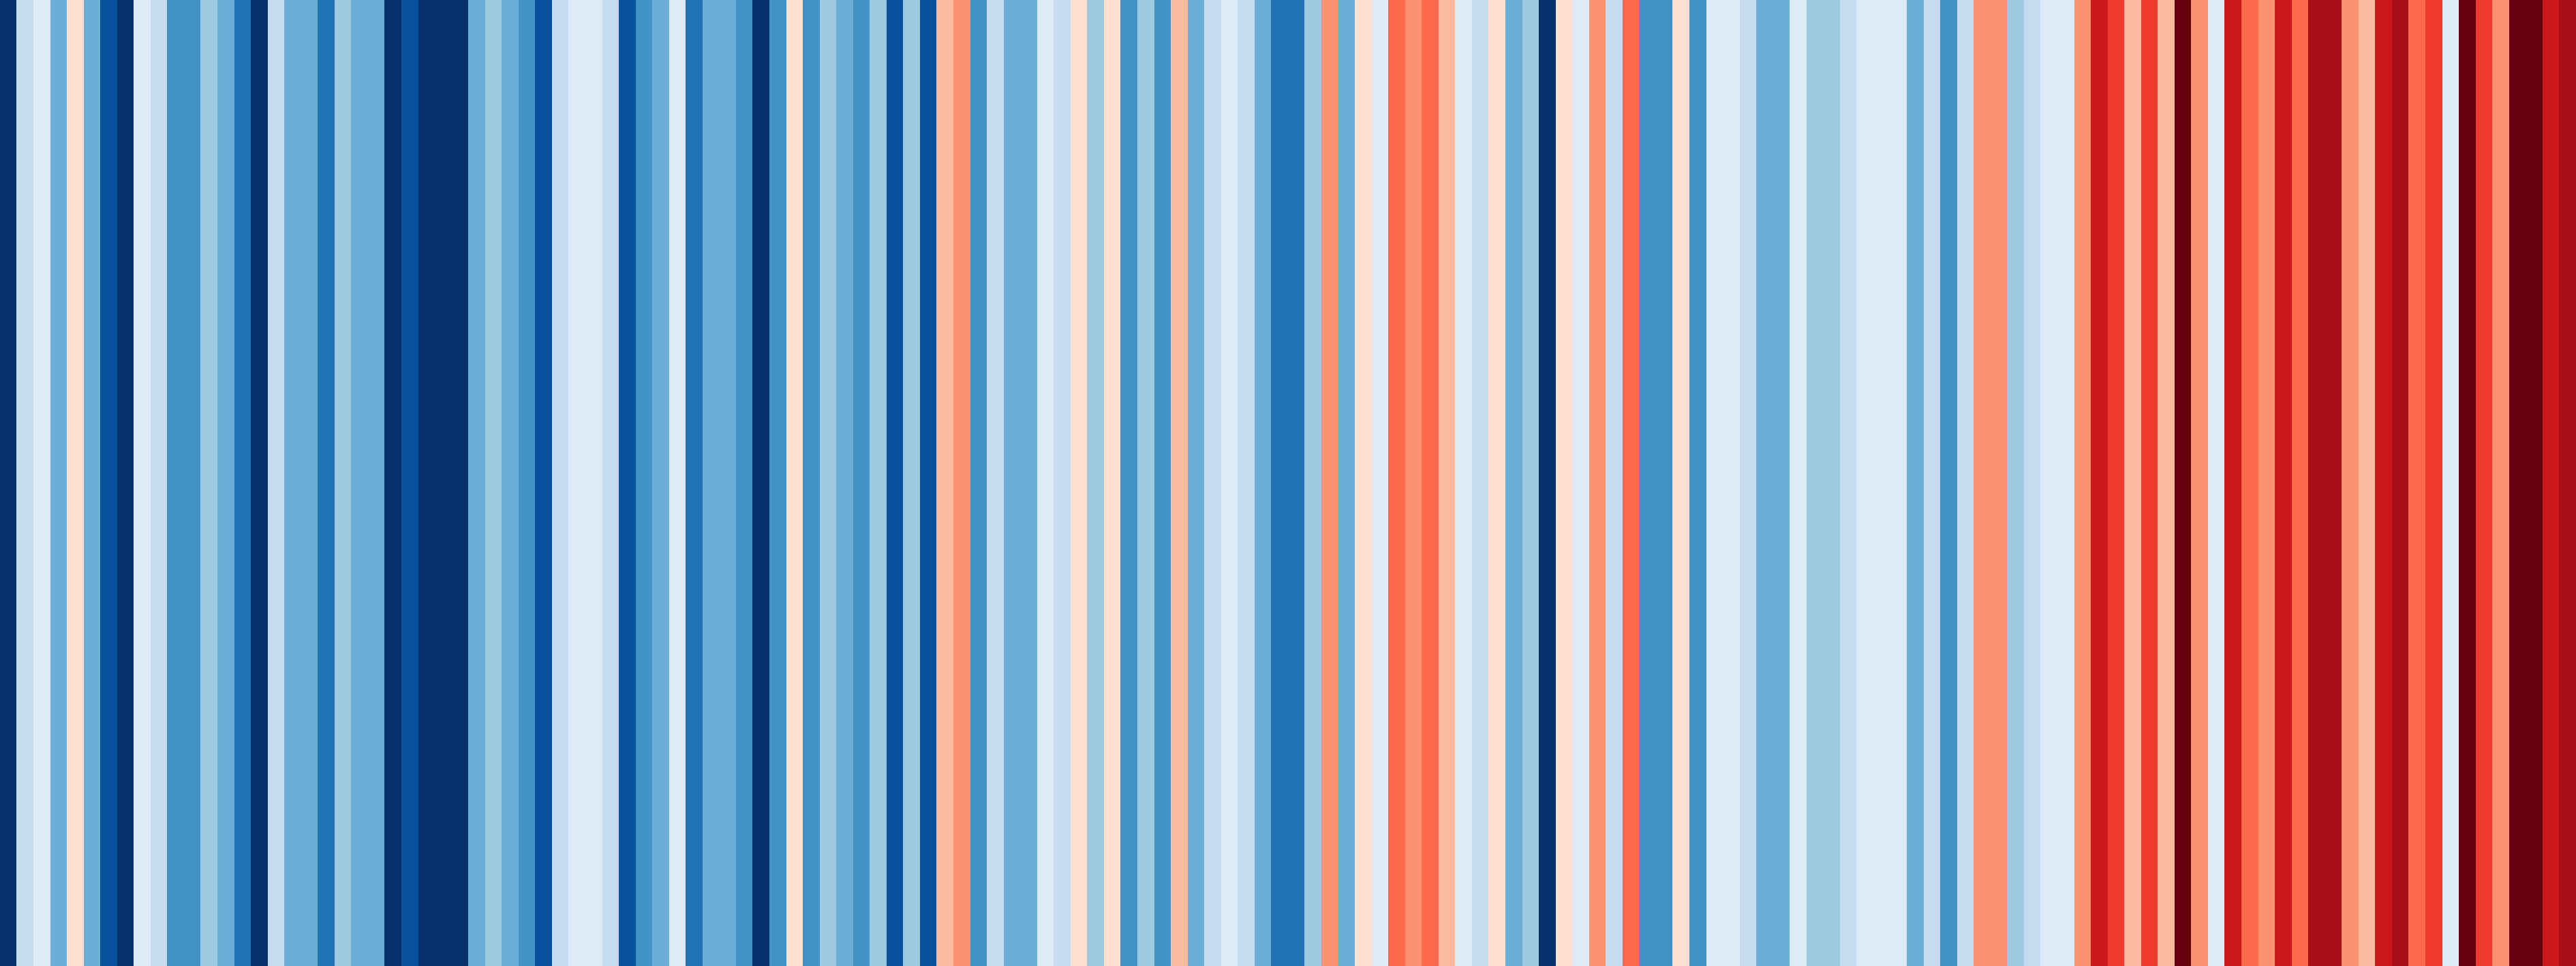 Warming stripes - Annual temperatures for Switzerland (1864-2017)